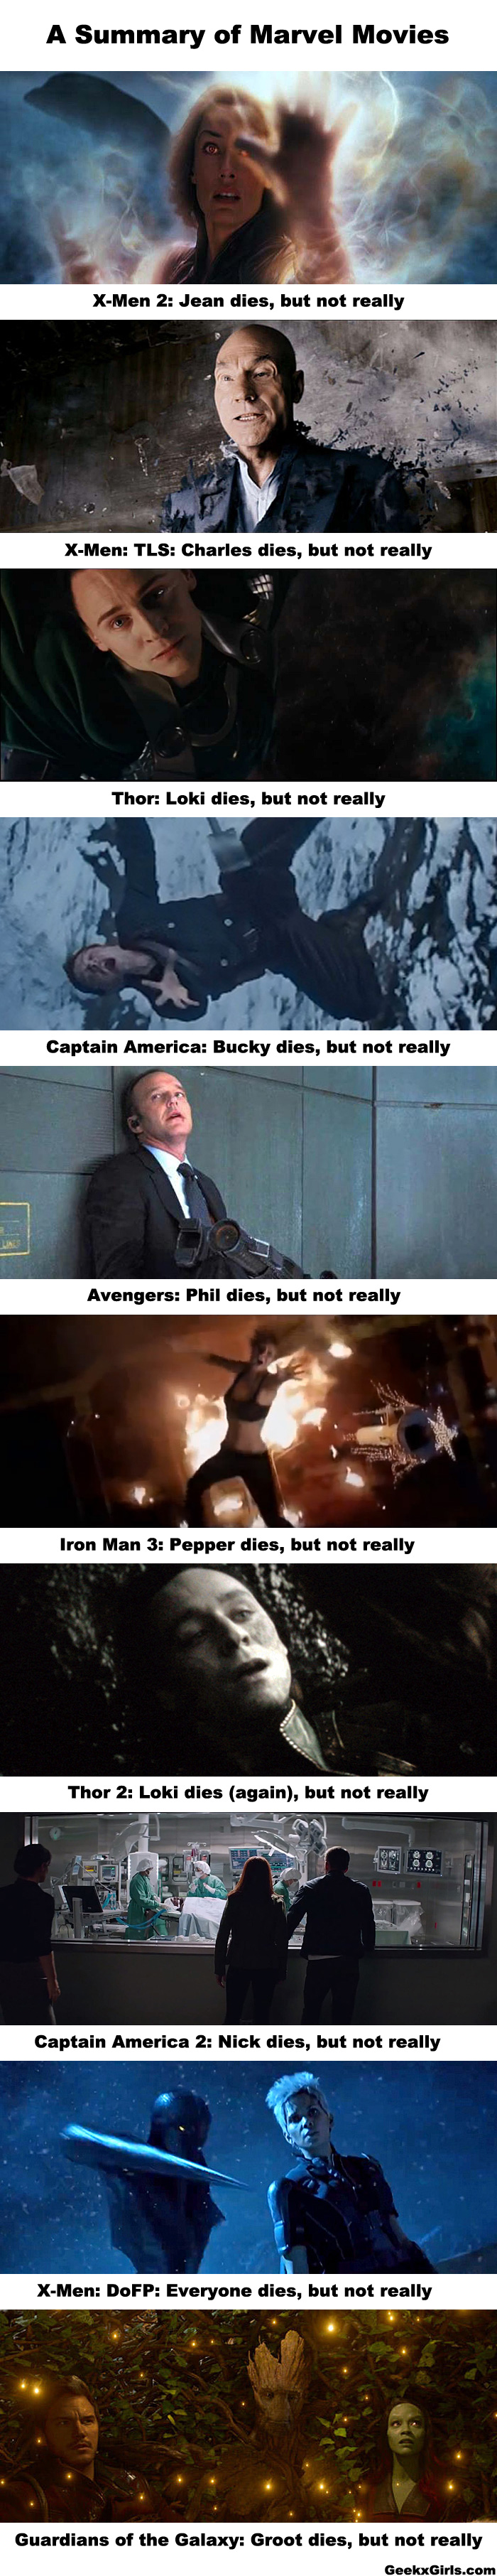 A Summary of Marvel Movies